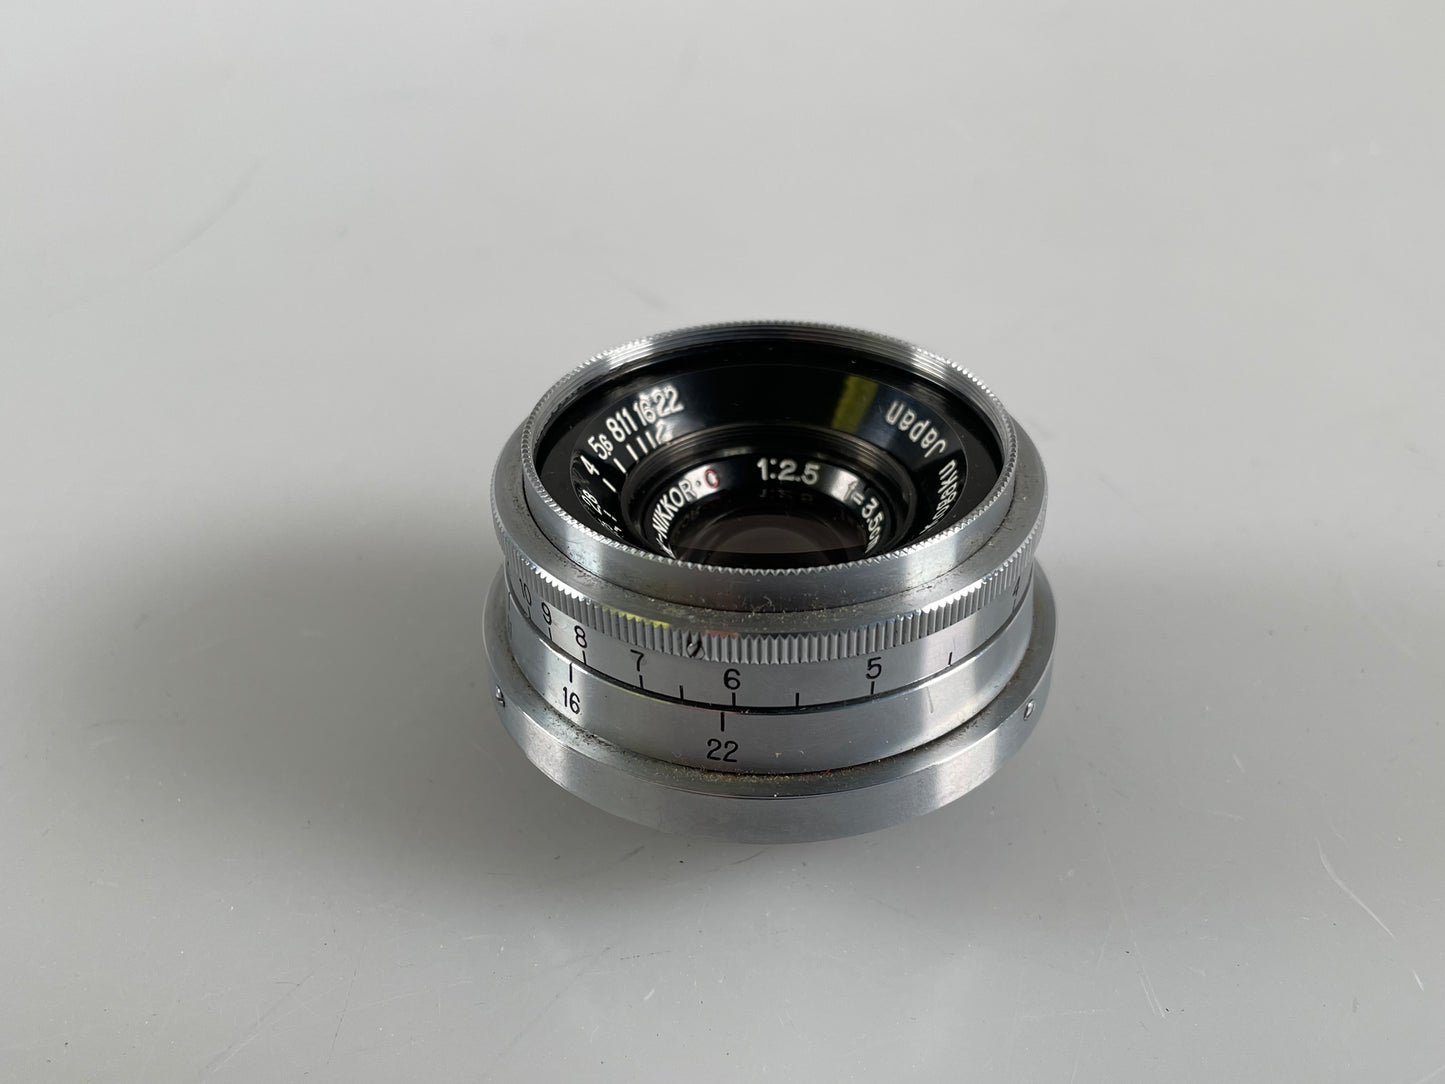 Nikon W Nikkor C Nippon Kogaku 3.5cm 35mm f2.5 Rangefinder lens